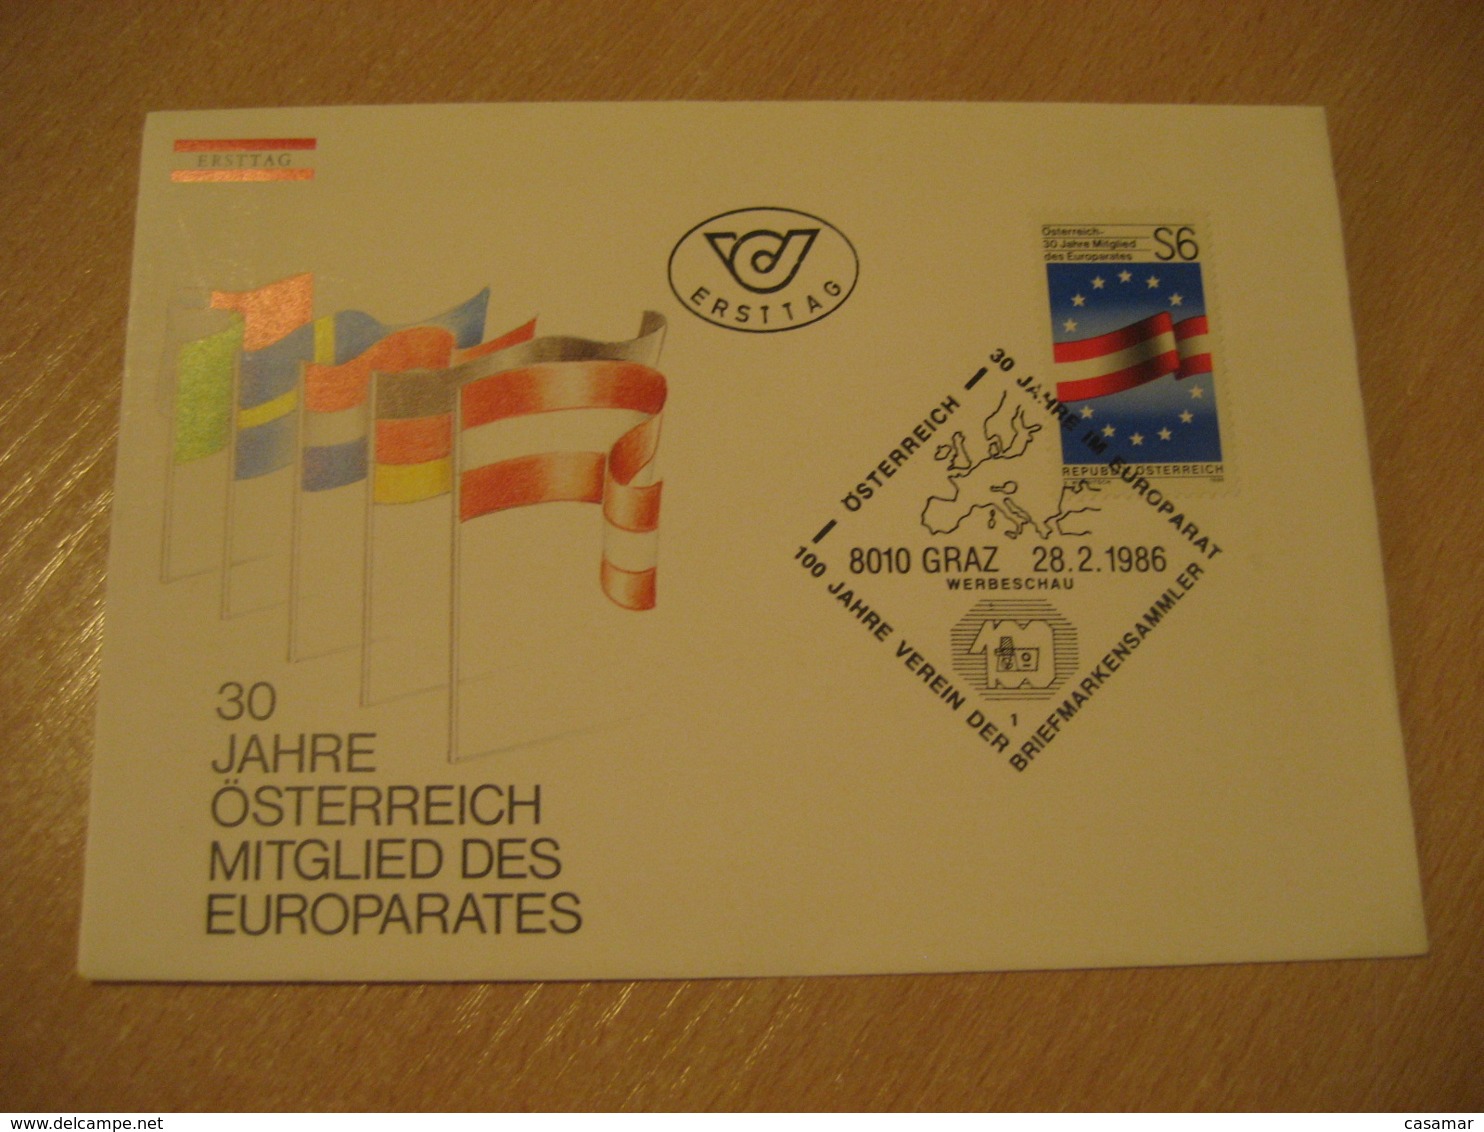 GRAZ 1986 Europa Europeism Flag Flags FDC Cancel Cover AUSTRIA - Covers